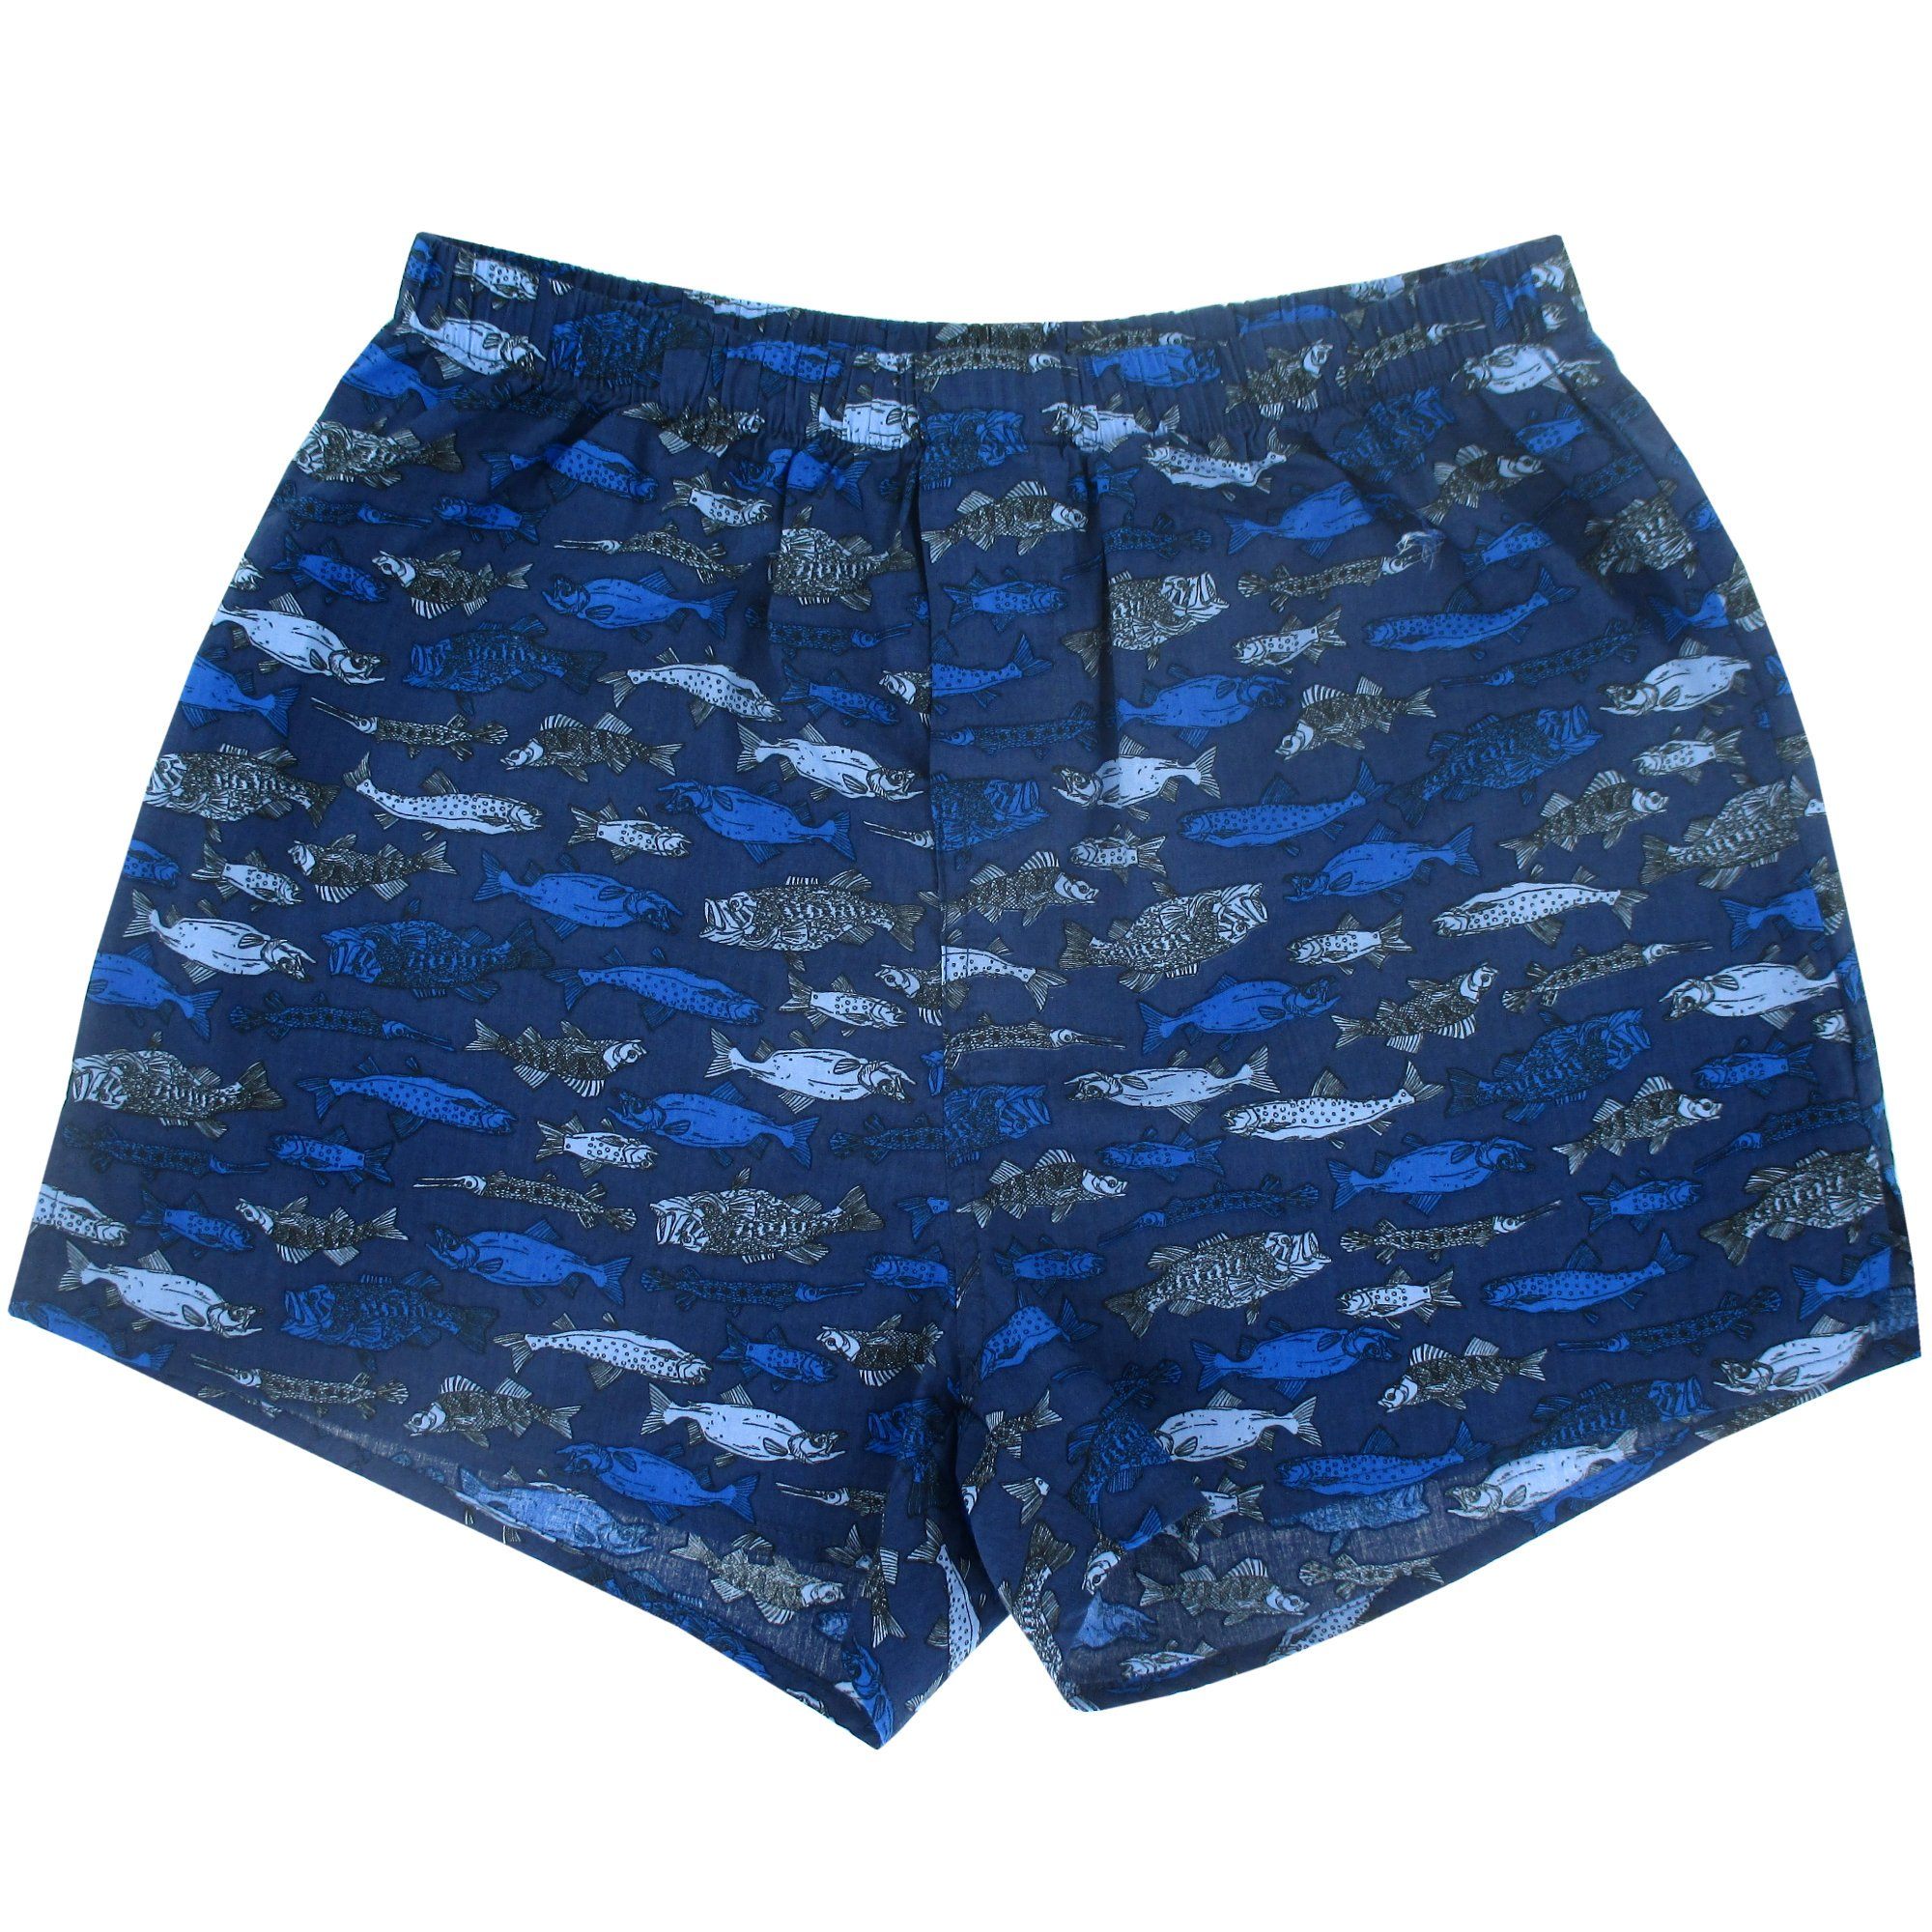 Fish Boxers For Men. Buy Mens Swimming Fish Boxer Shorts Now